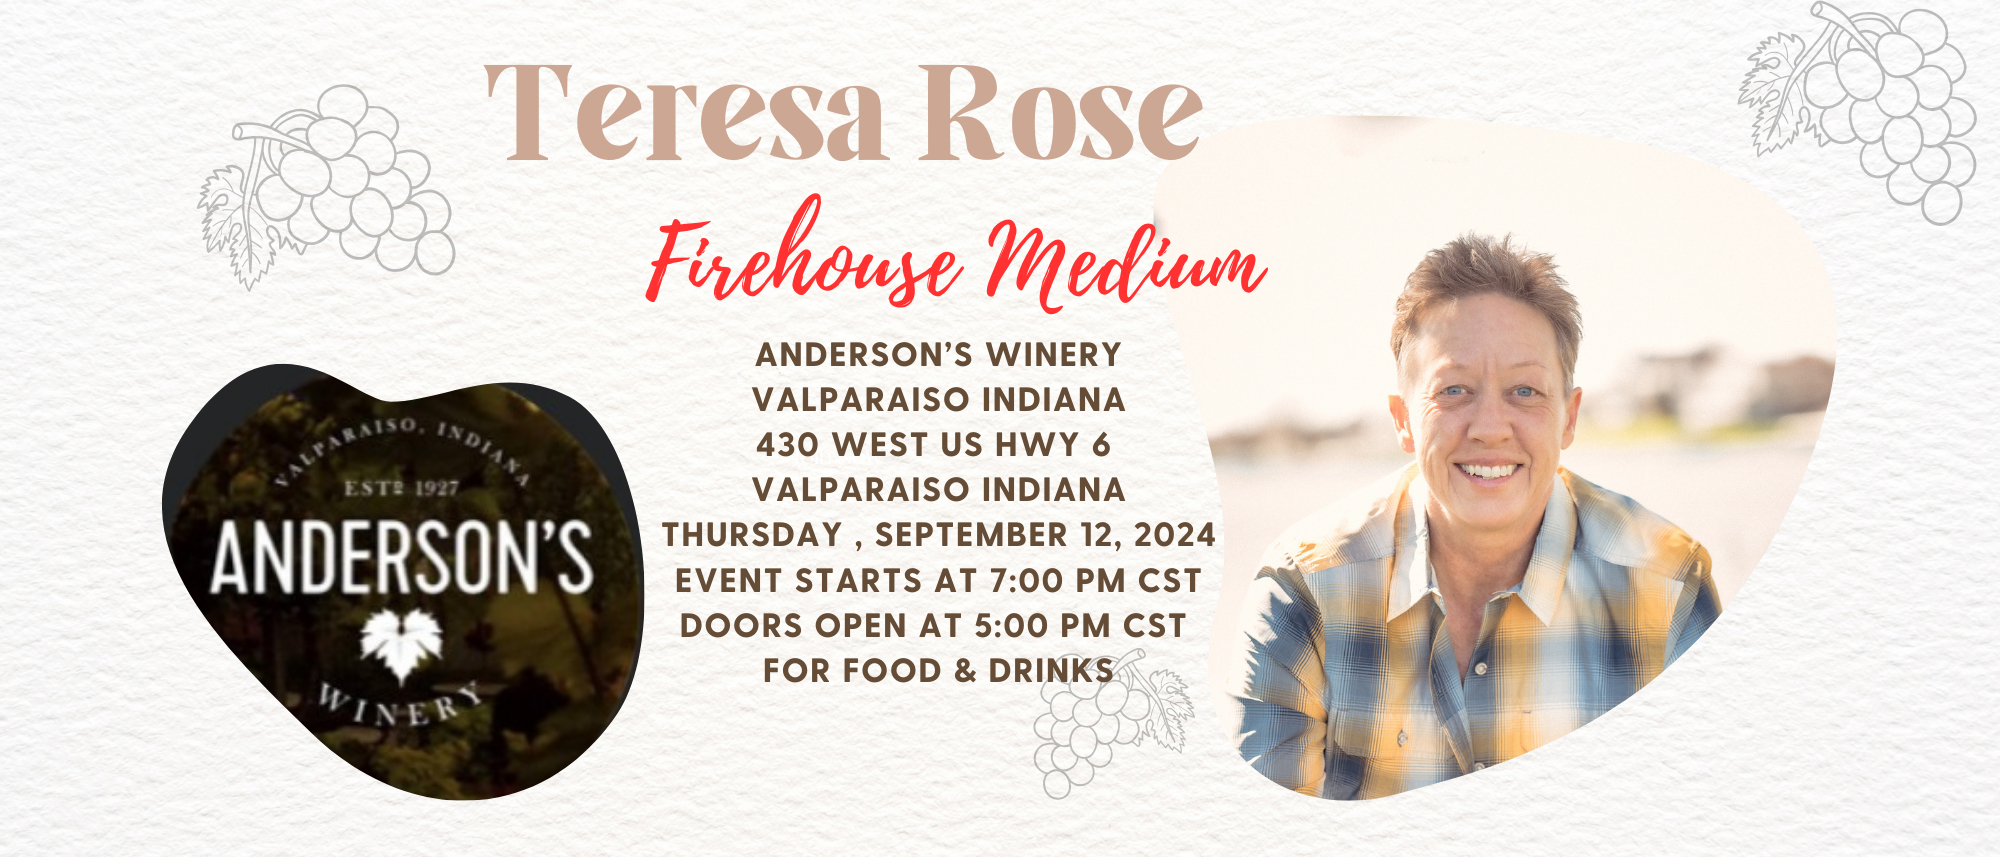 Teresa Rose Firehouse Medium | Anderson's Winery